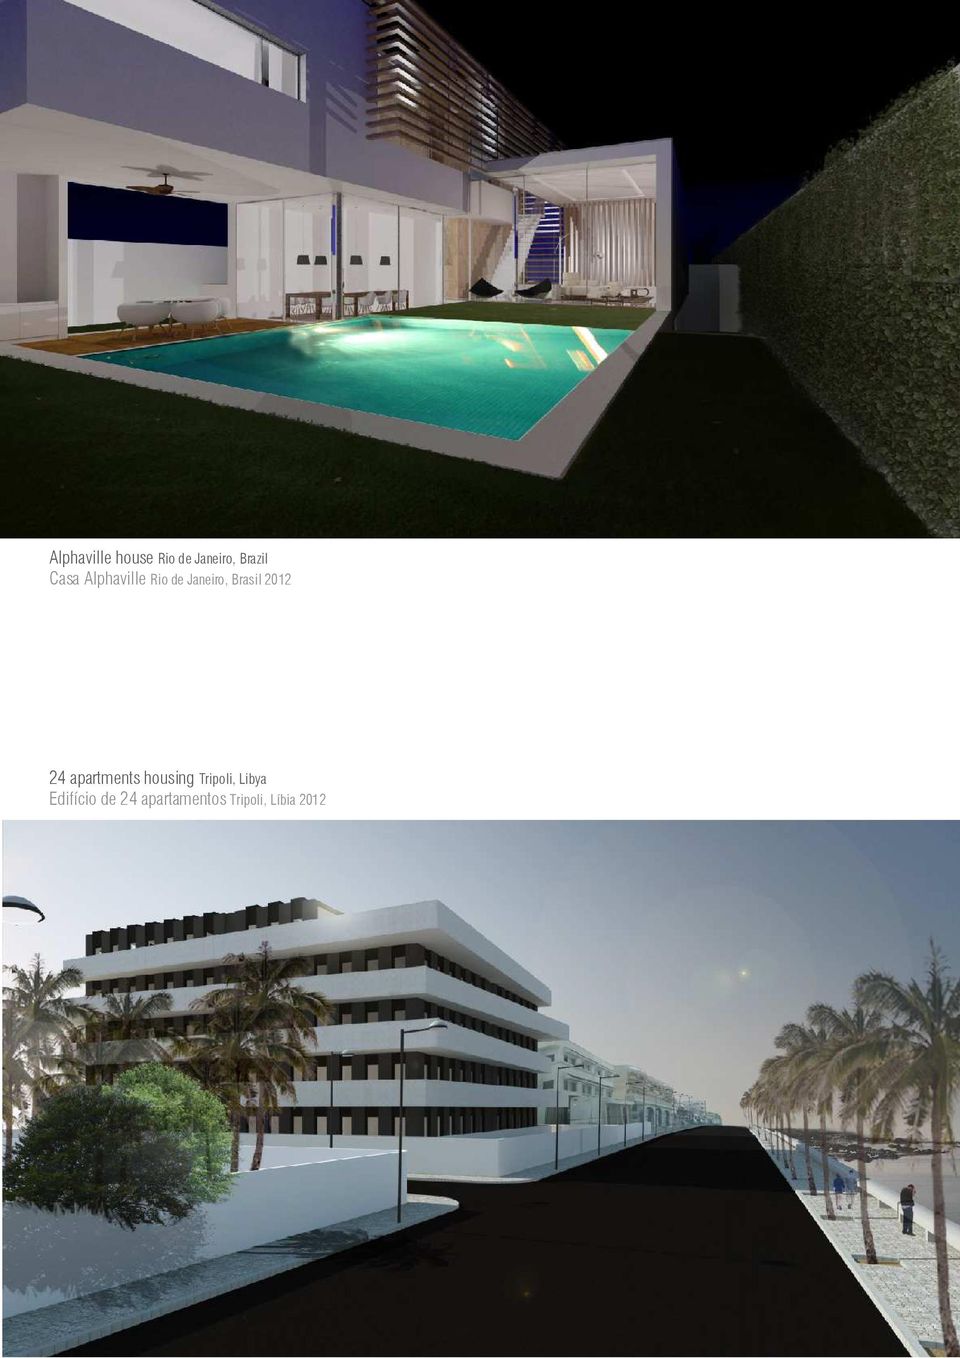 2012 24 apartments housing Tripoli, Libya